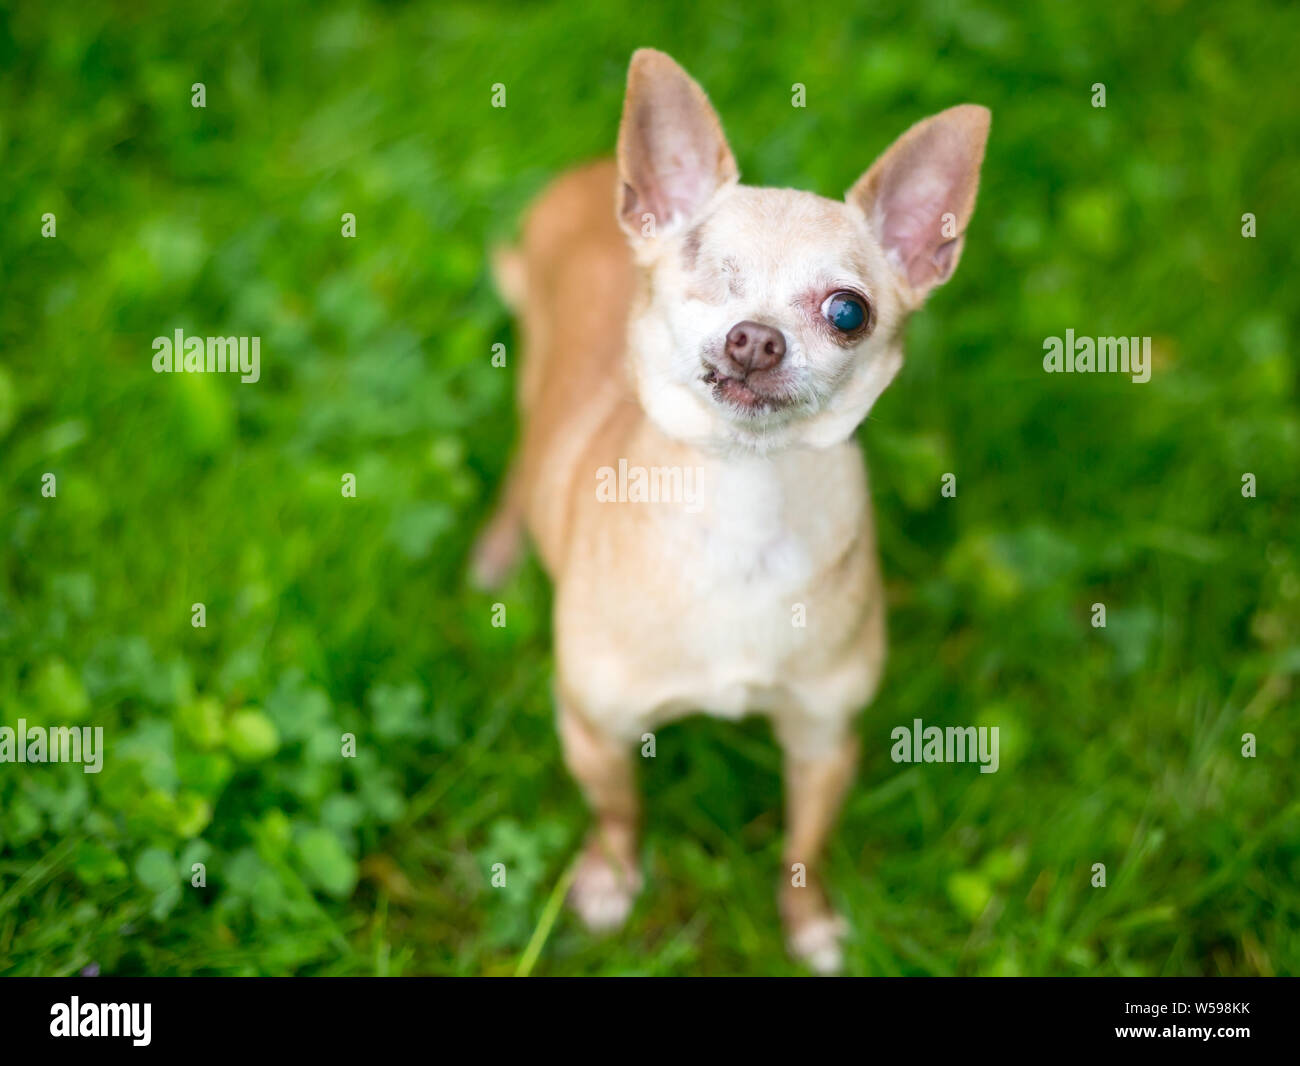 A one-eyed Chihuahua dog looking up at the camera Stock Photo